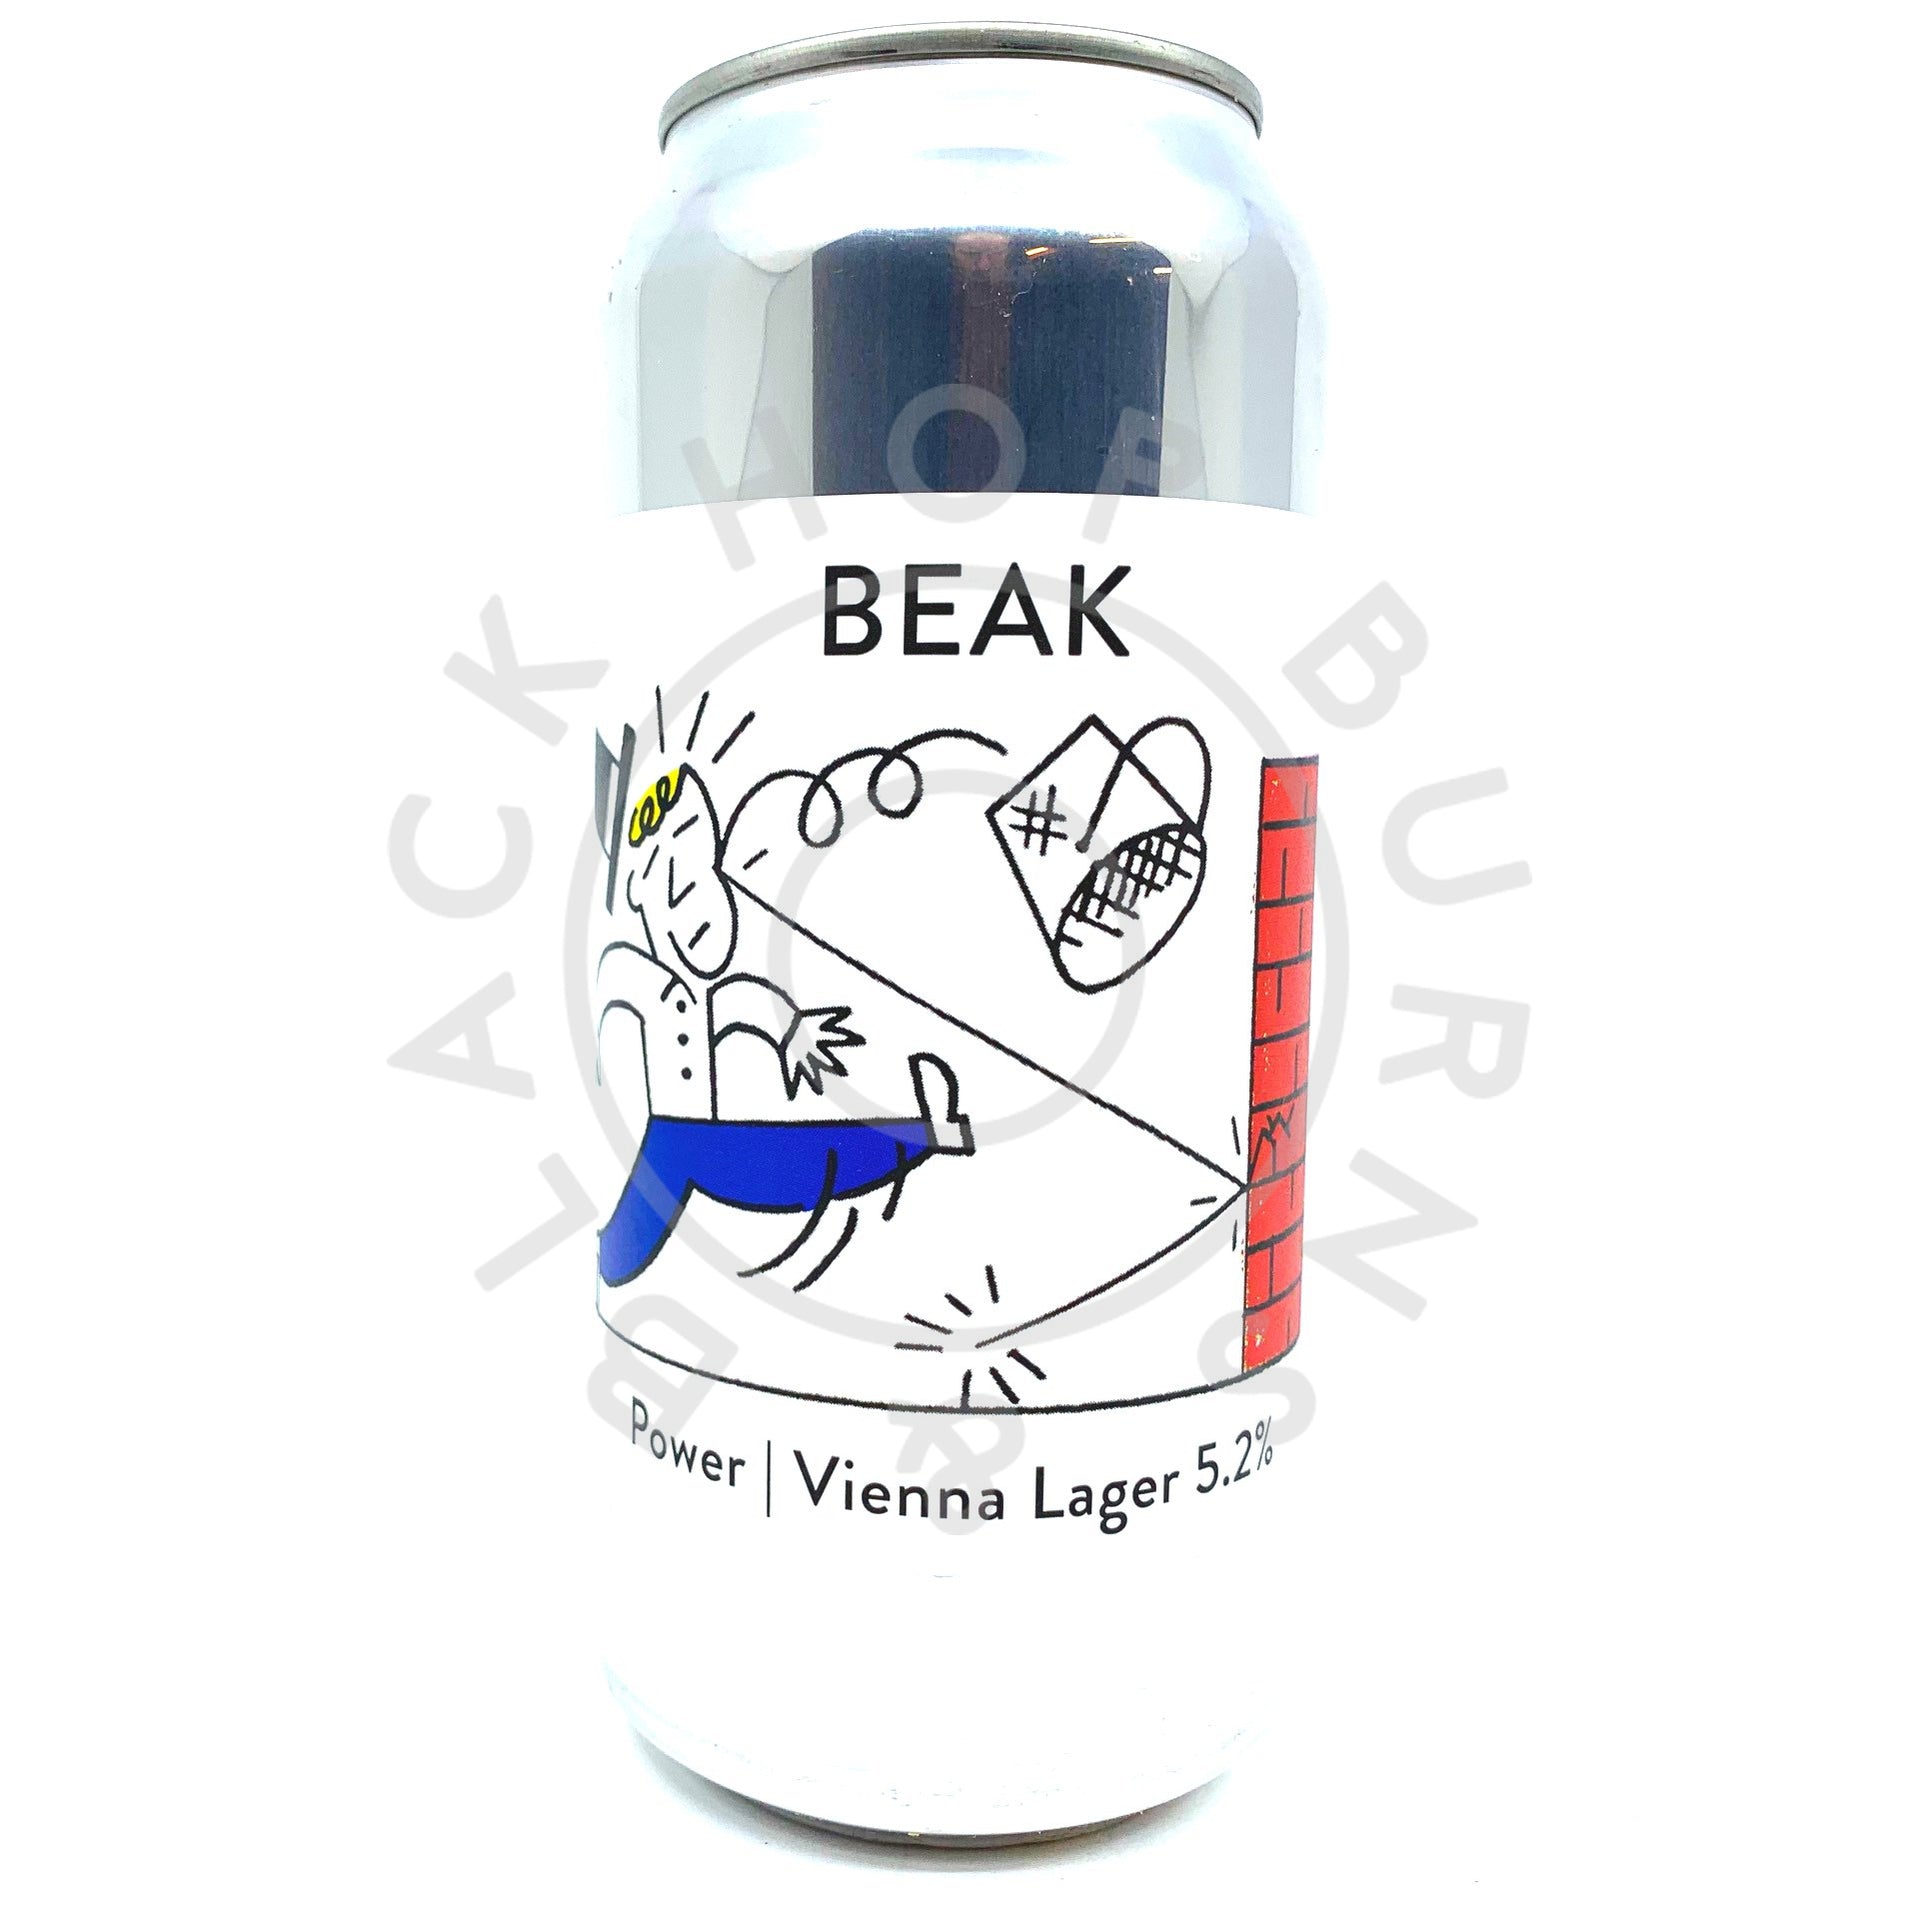 Beak Brewery Power Vienna Lager 5.2% (440ml can)-Hop Burns & Black